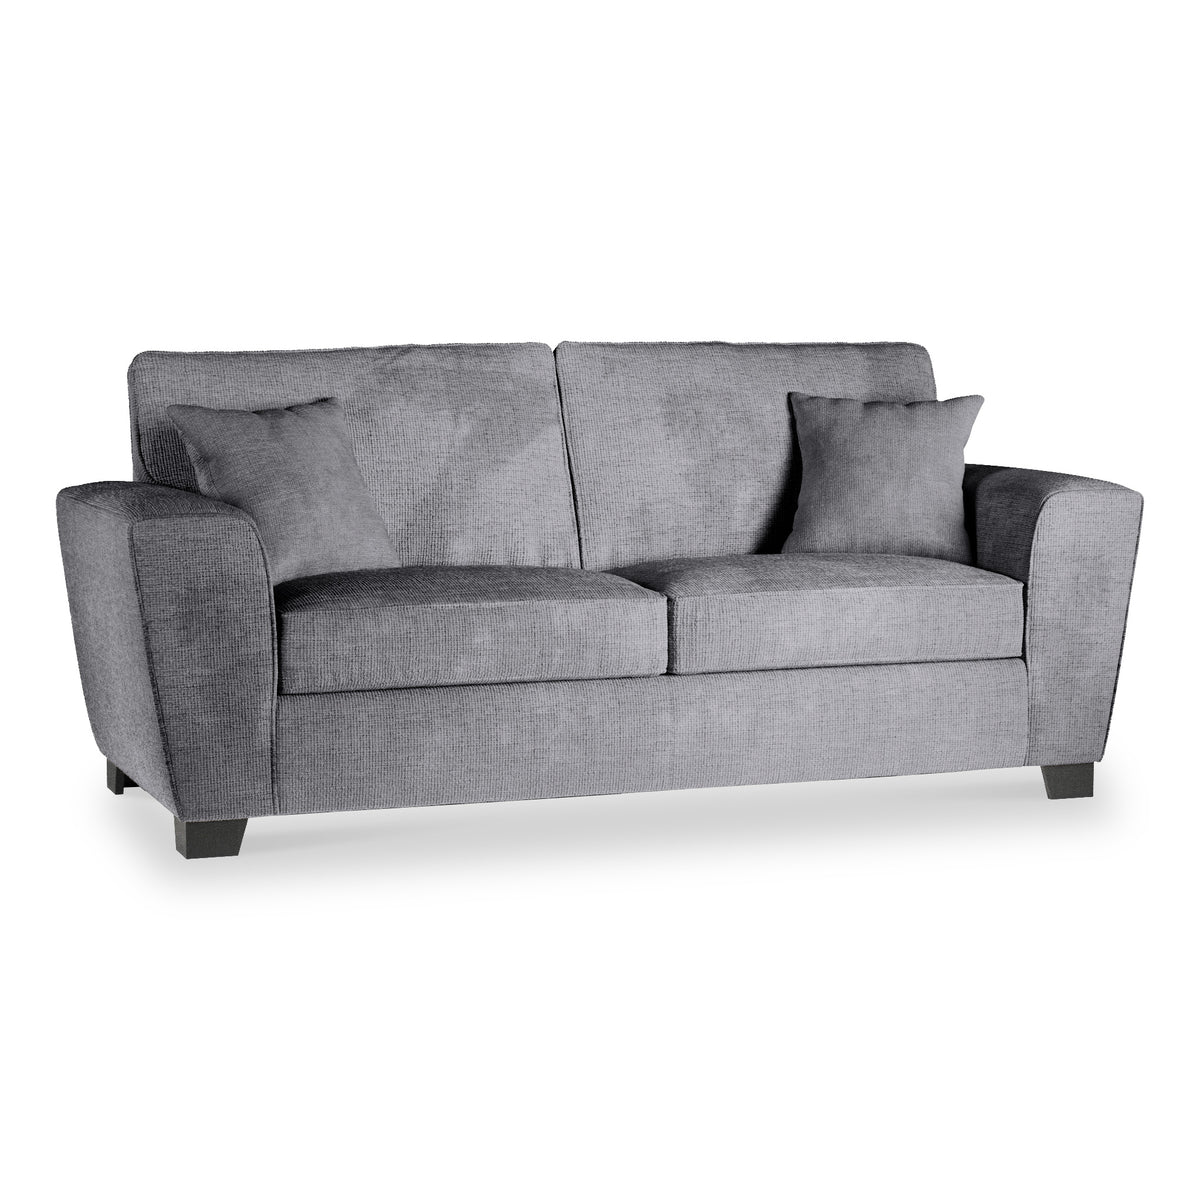 Chester Slate Hopsack 3 Seater Sofa from Roseland Furniture